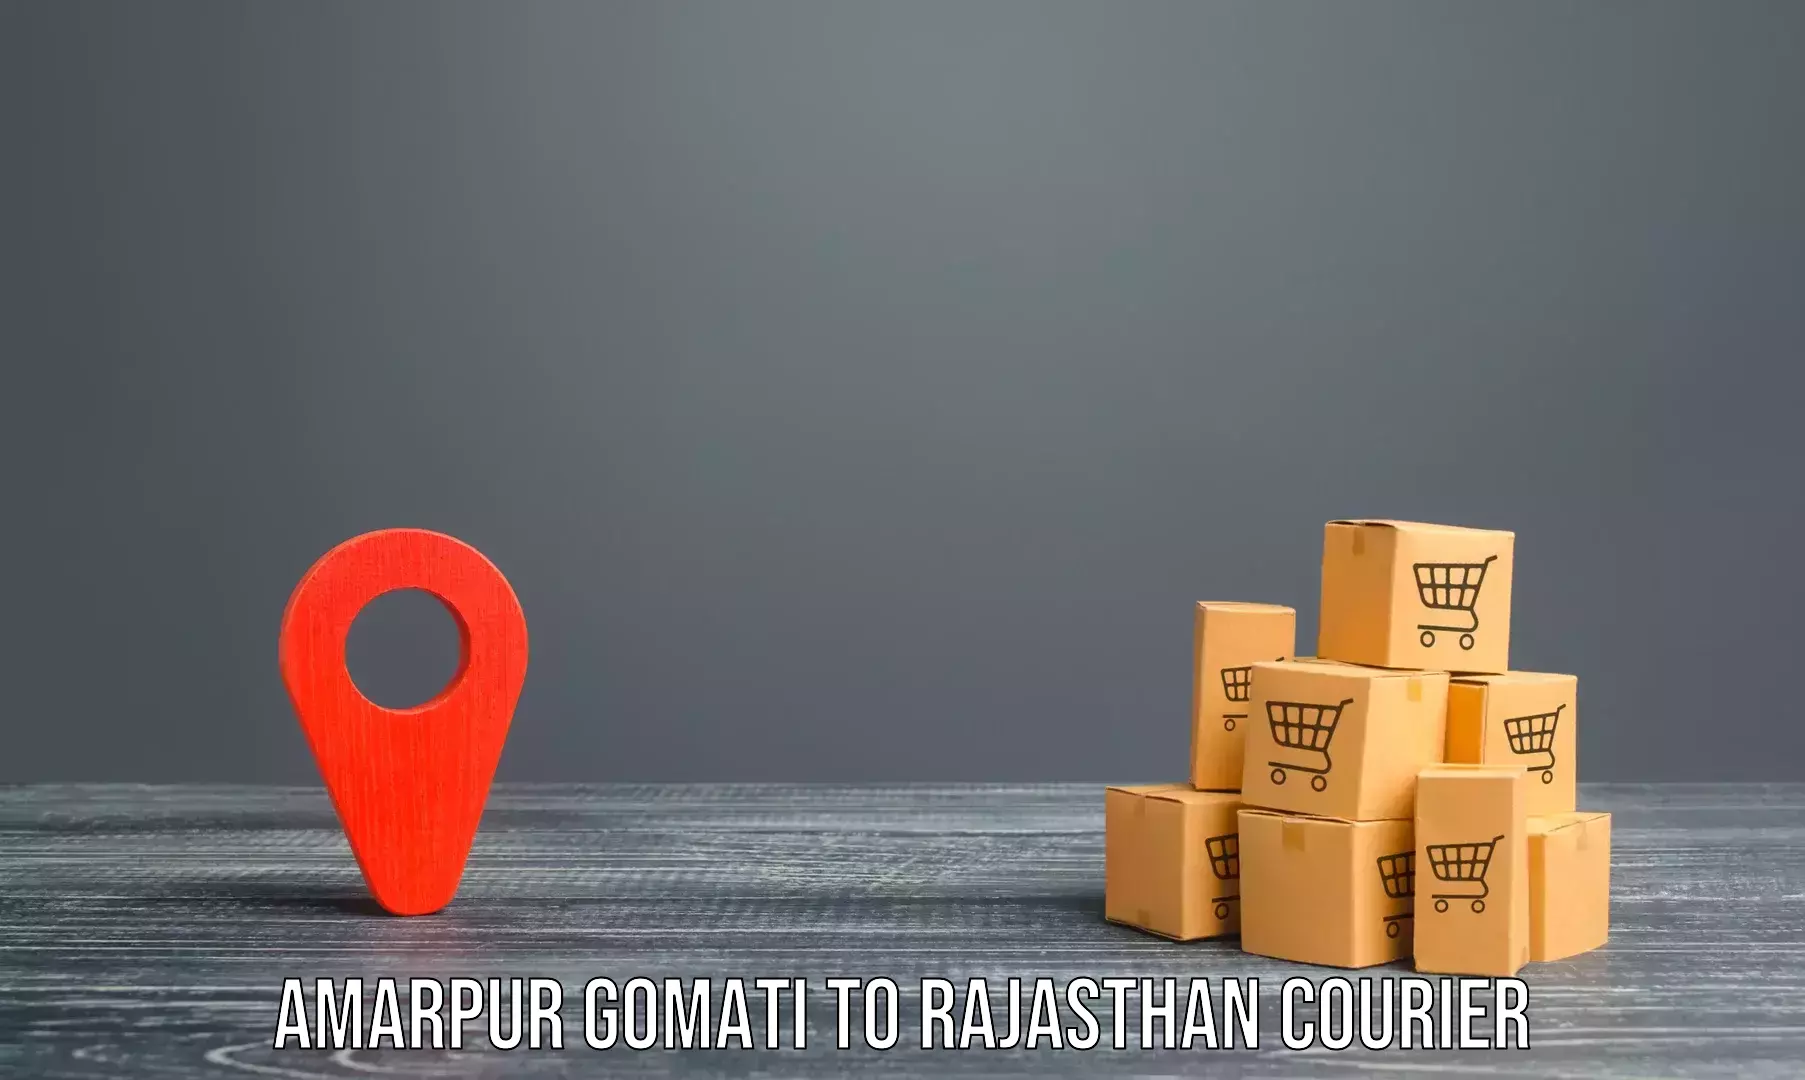 Furniture moving experts Amarpur Gomati to Pali